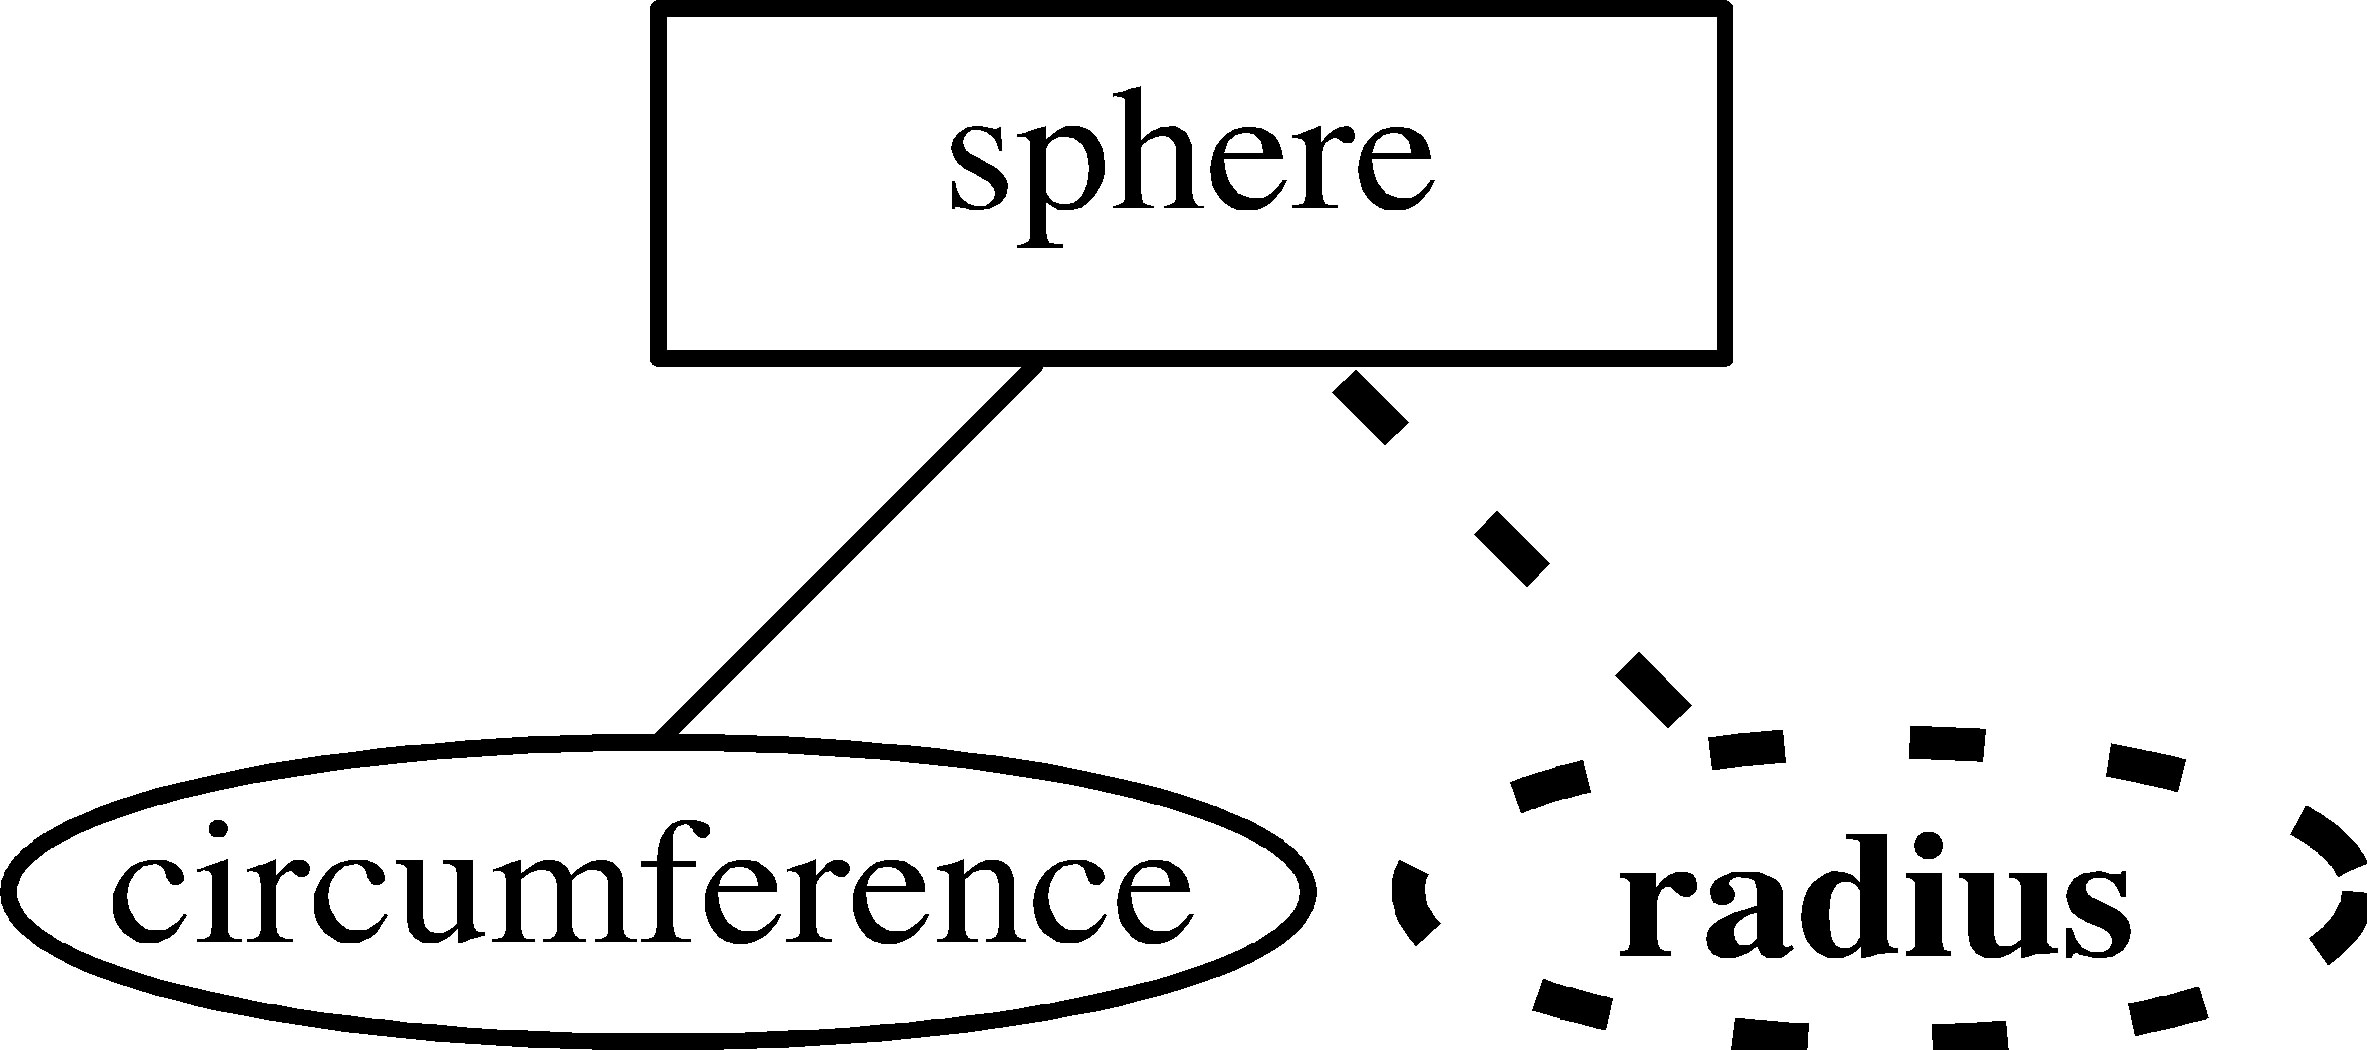 Entity-Relationship Model for Er Diagram Attribute Types